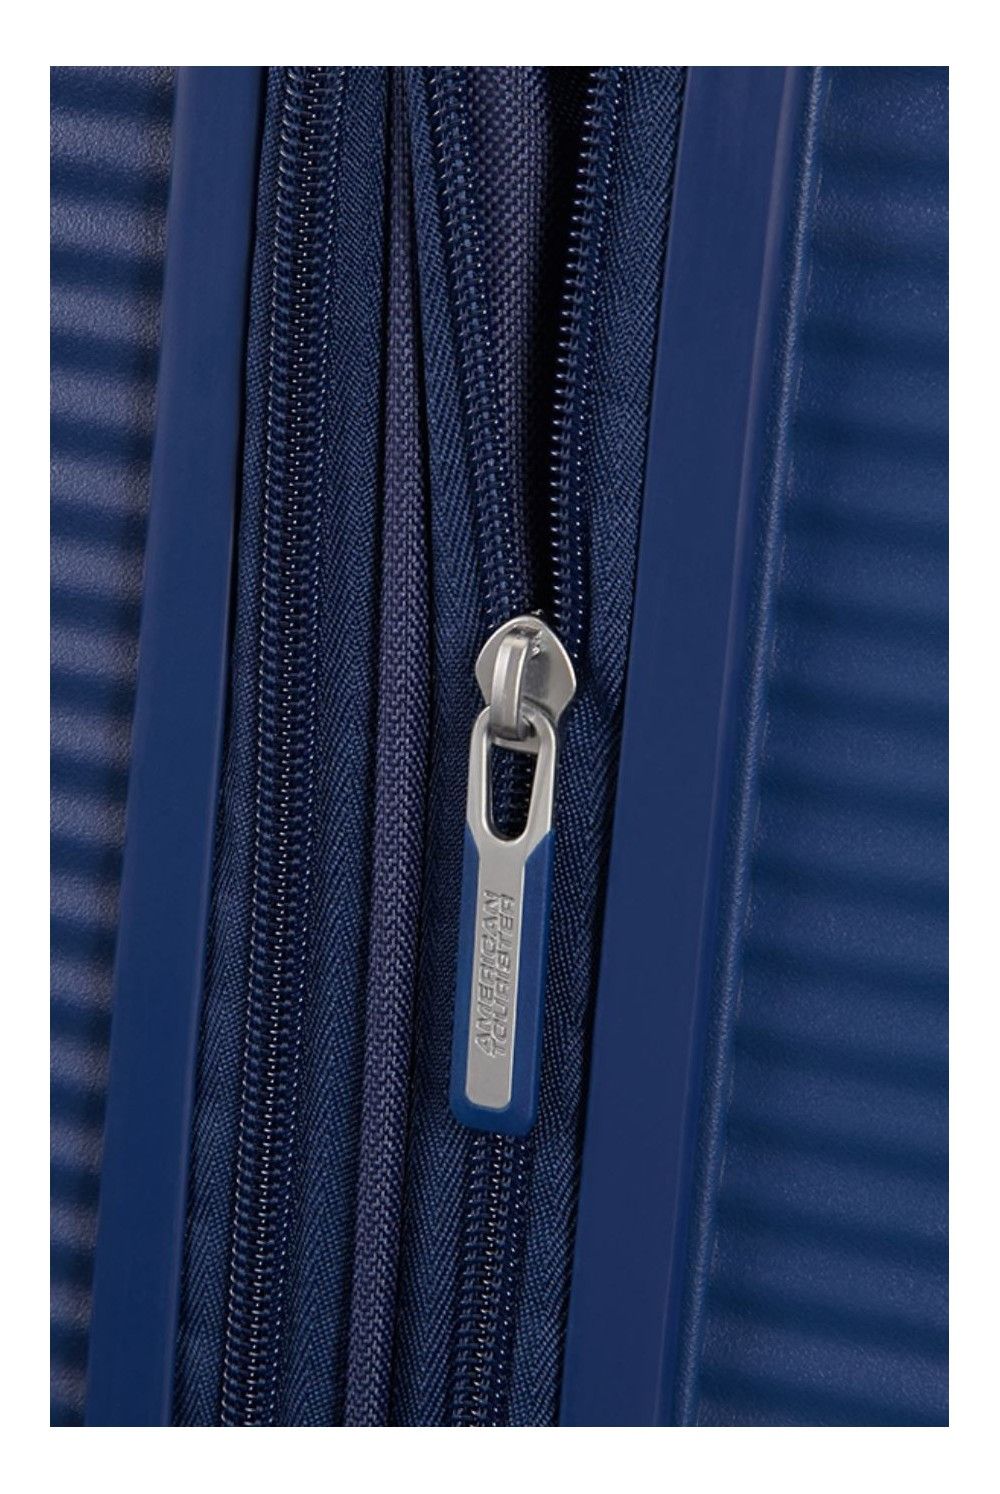 Suitcase hand luggage AT Soundbox 55x40x20/23 cm 4 wheel expandable